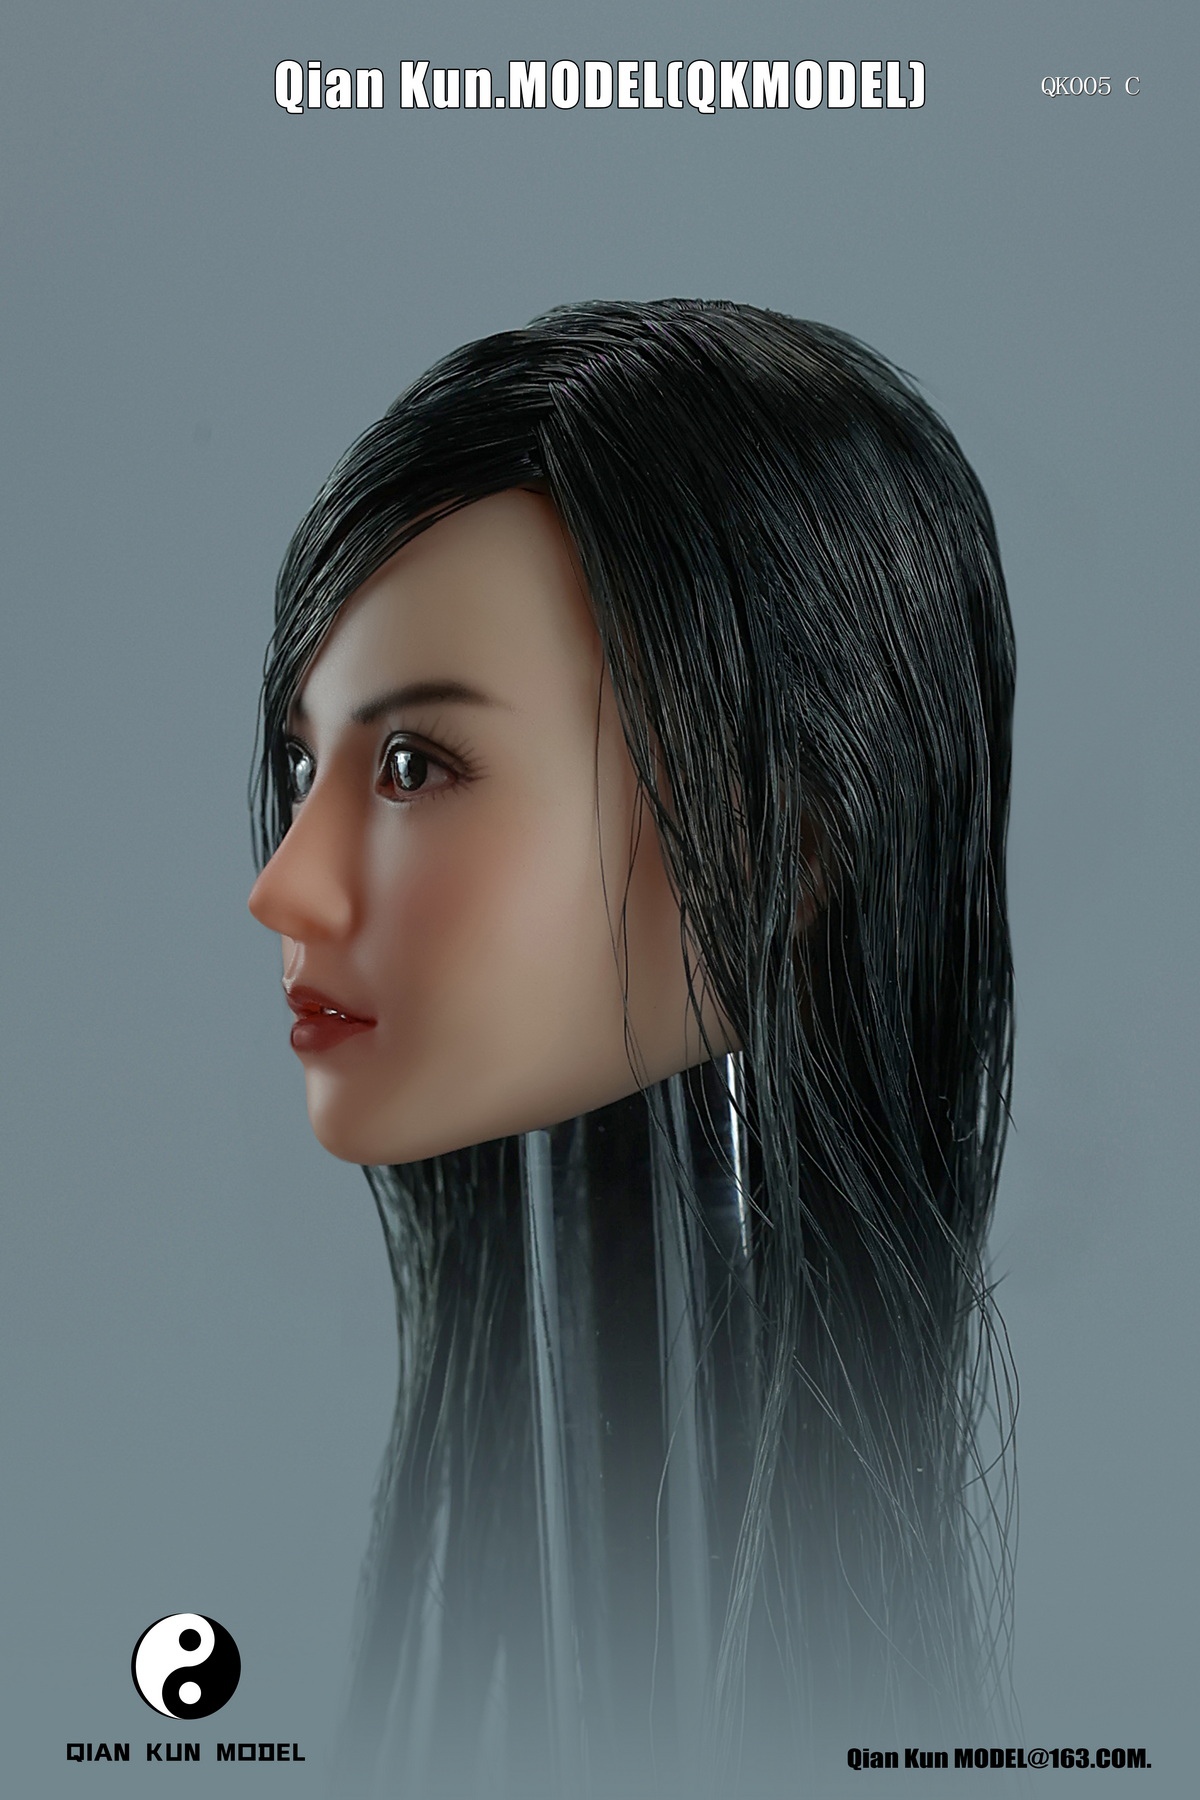 QianKunModel - NEW PRODUCT: Qian Kun.Model - Sweet Asian Female Head Sculpture (QK005-A/B/C) 14156